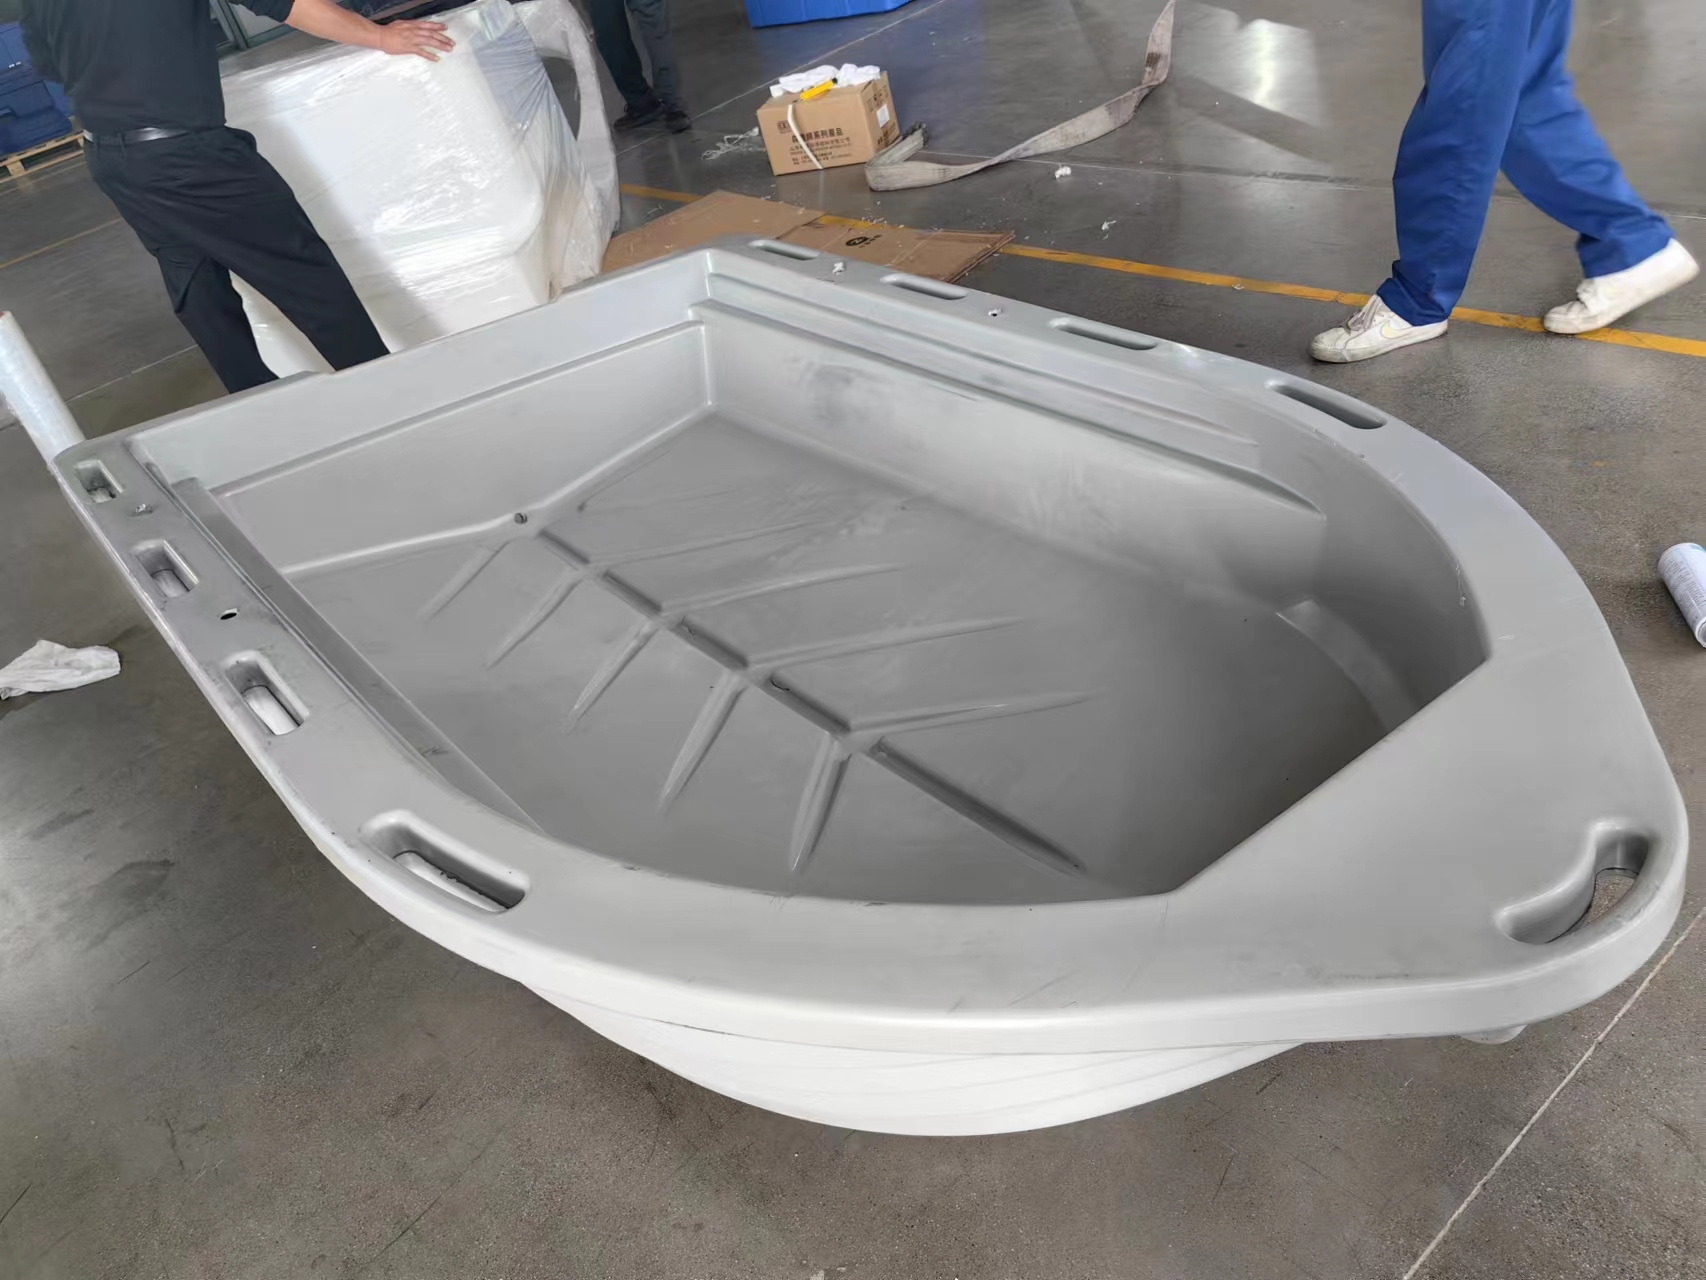 Rotational Boat Mould Aluminum CNC Casting kayak tooling